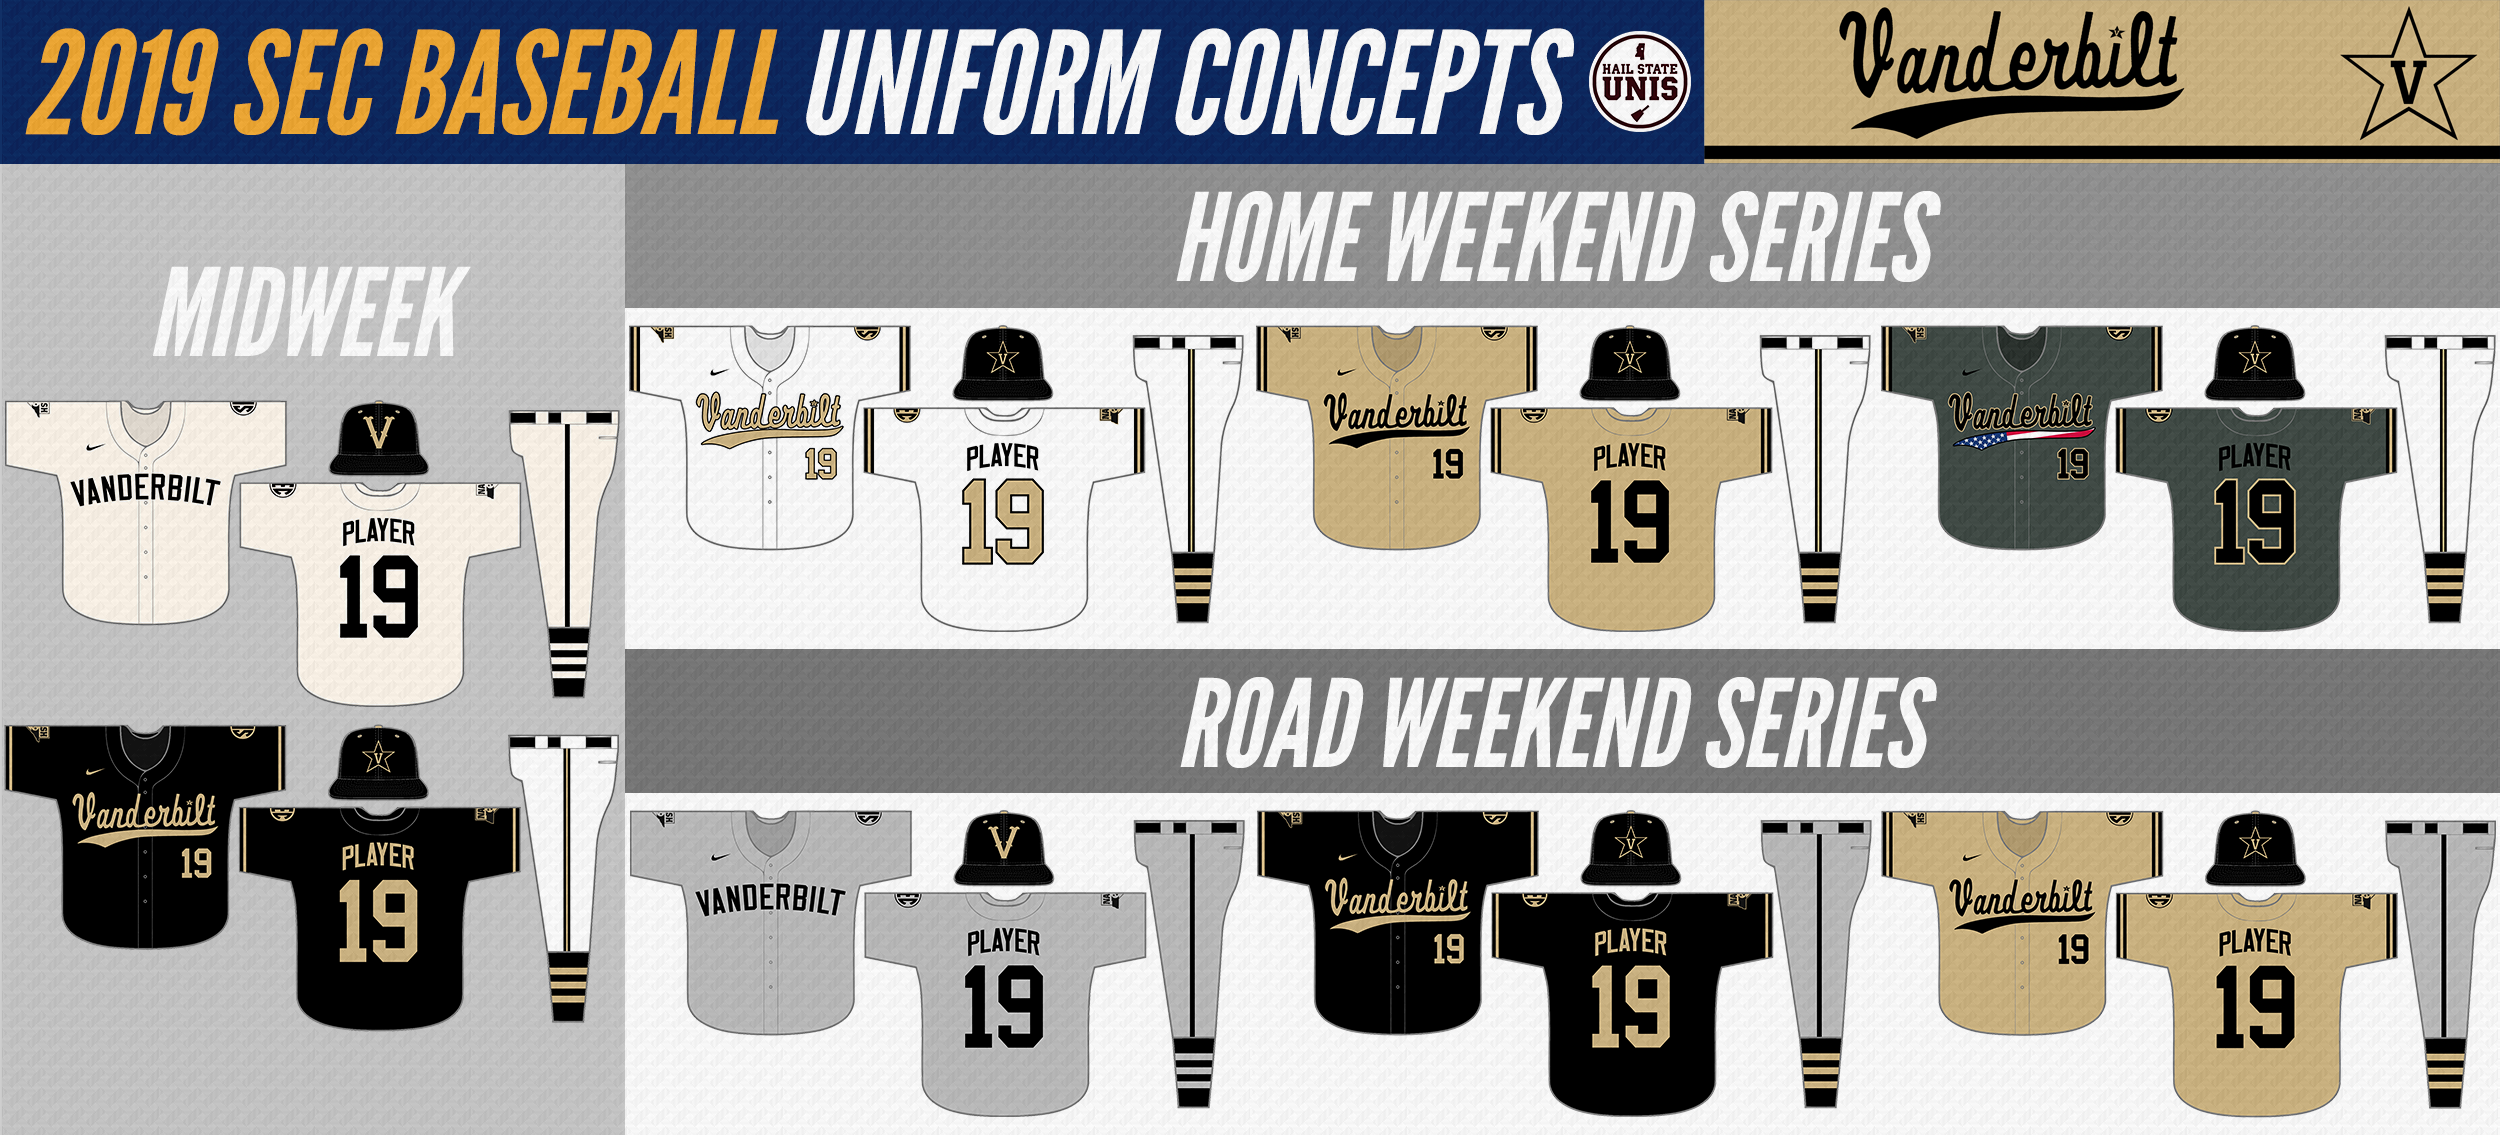 2019 SEC Baseball Uniform Concepts - Hail State Unis